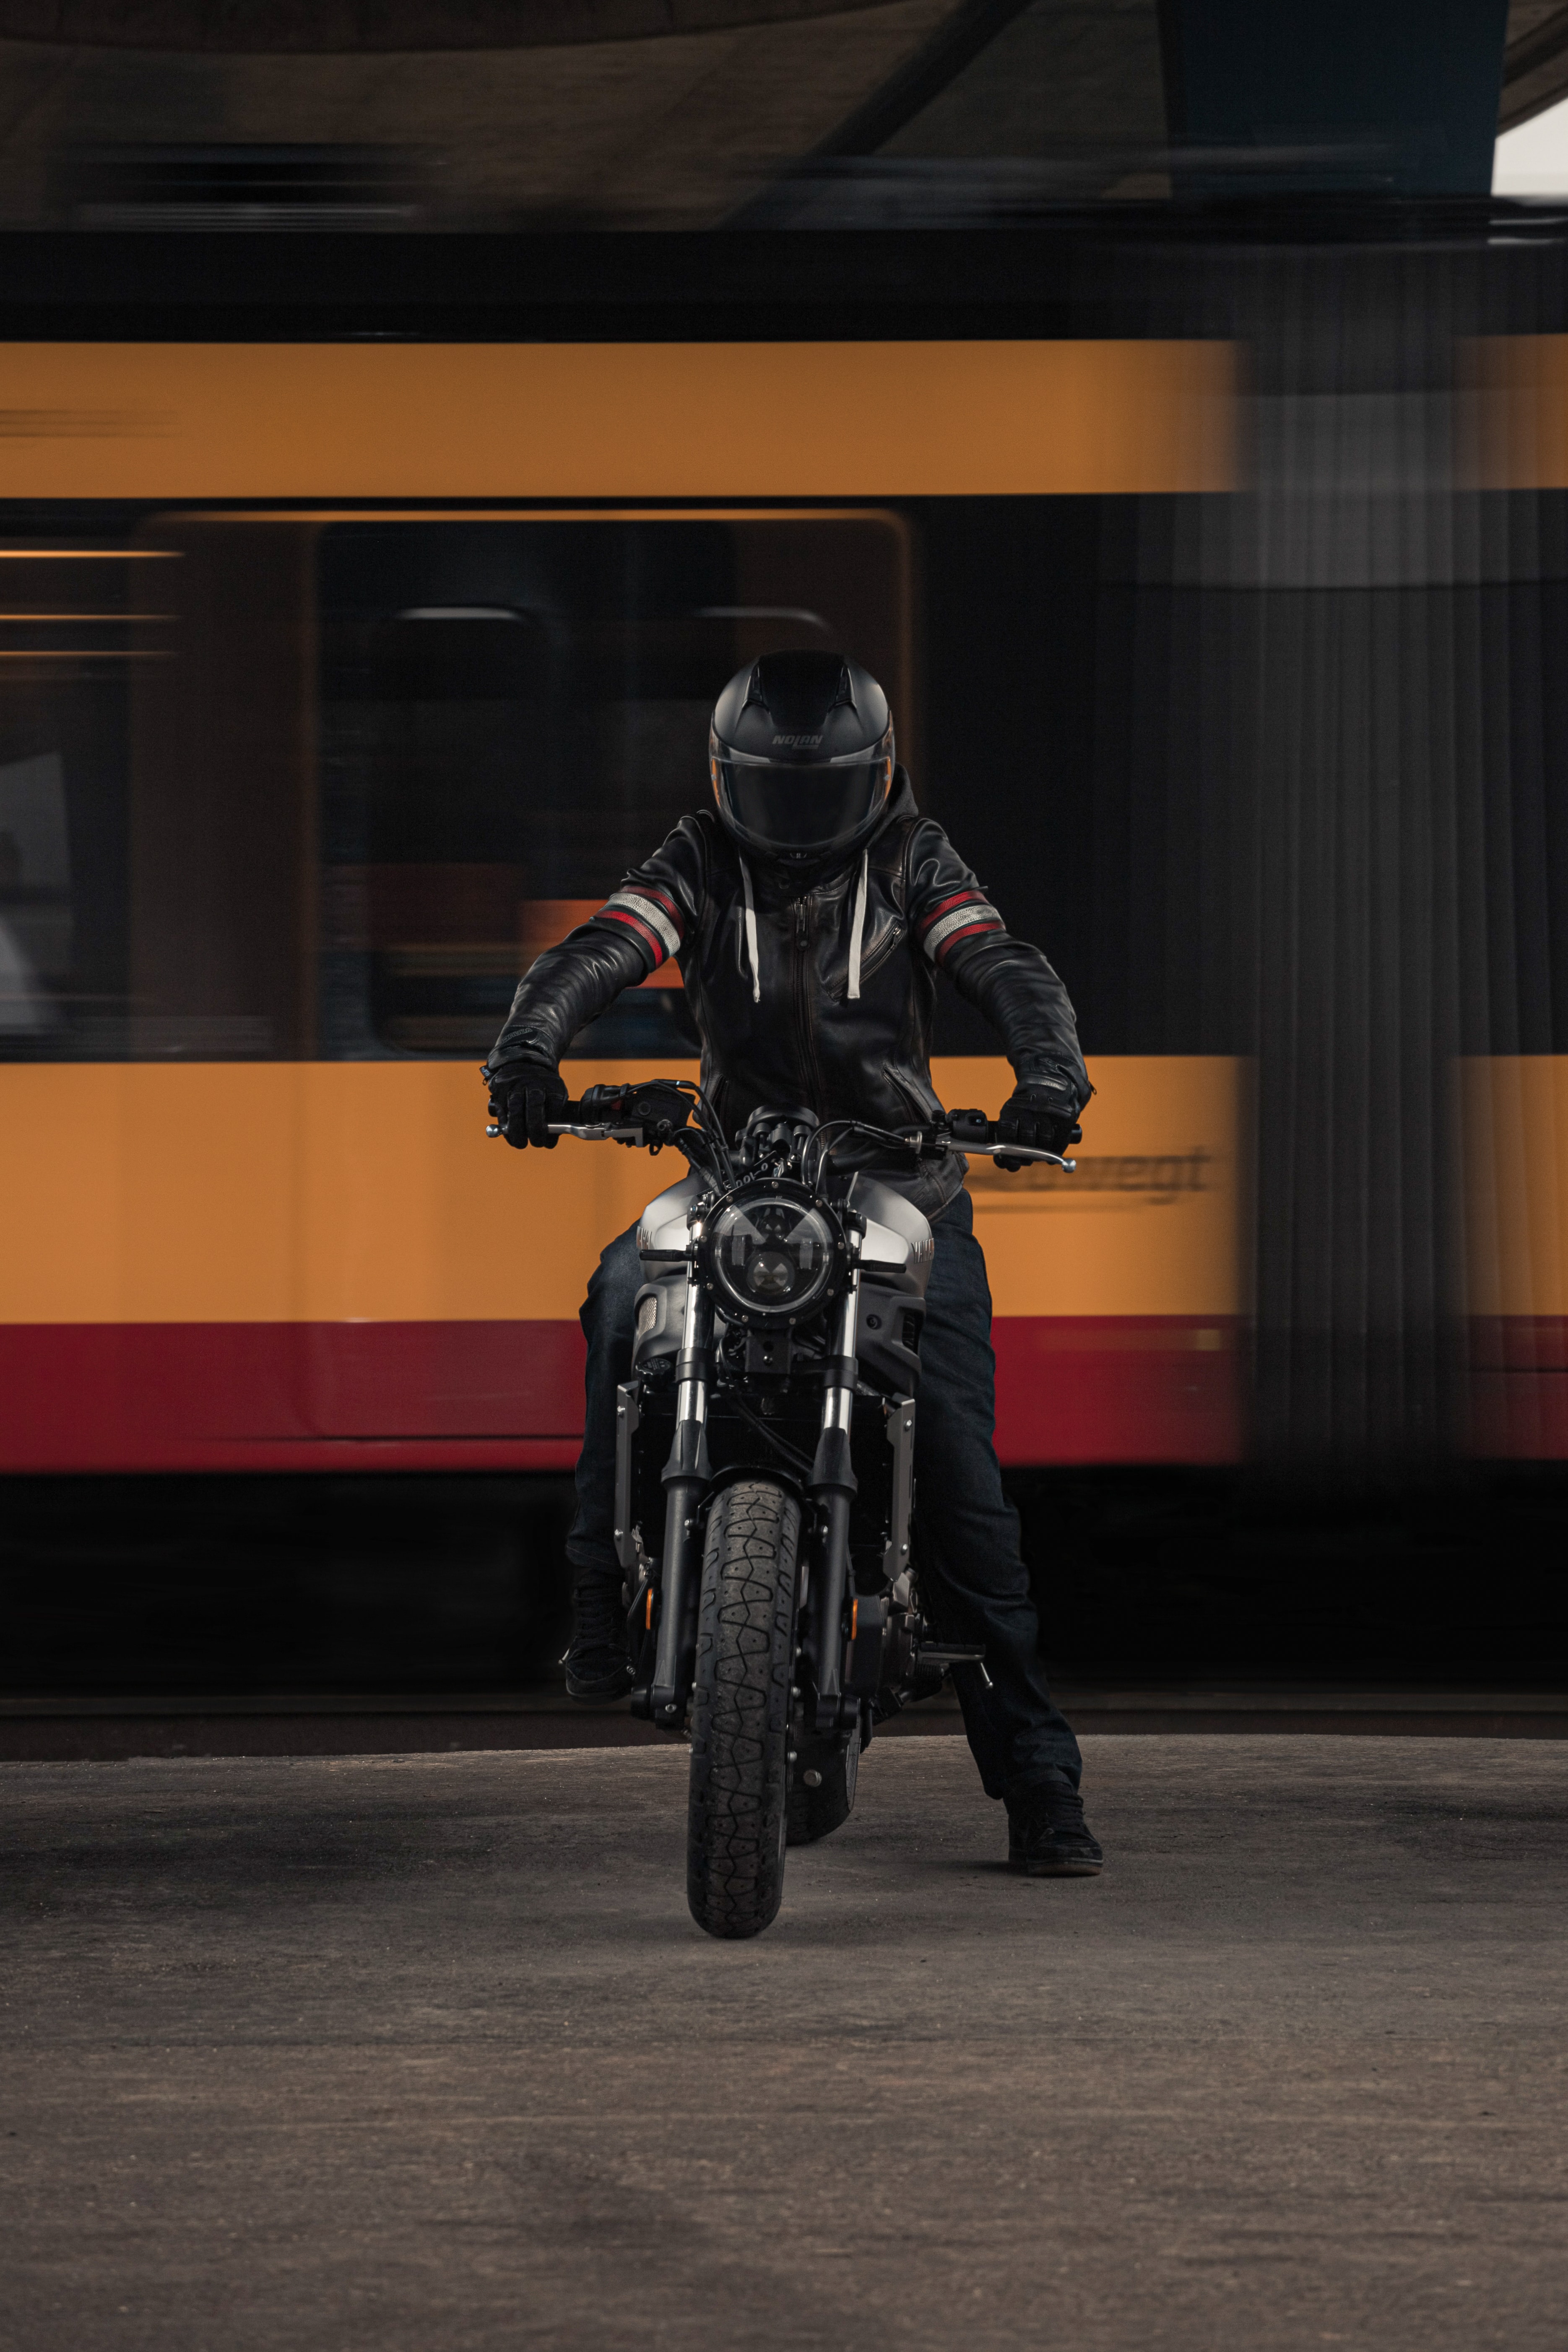 Desktop FHD motorcycles, motorcyclist, motorcycle, headlight, parking